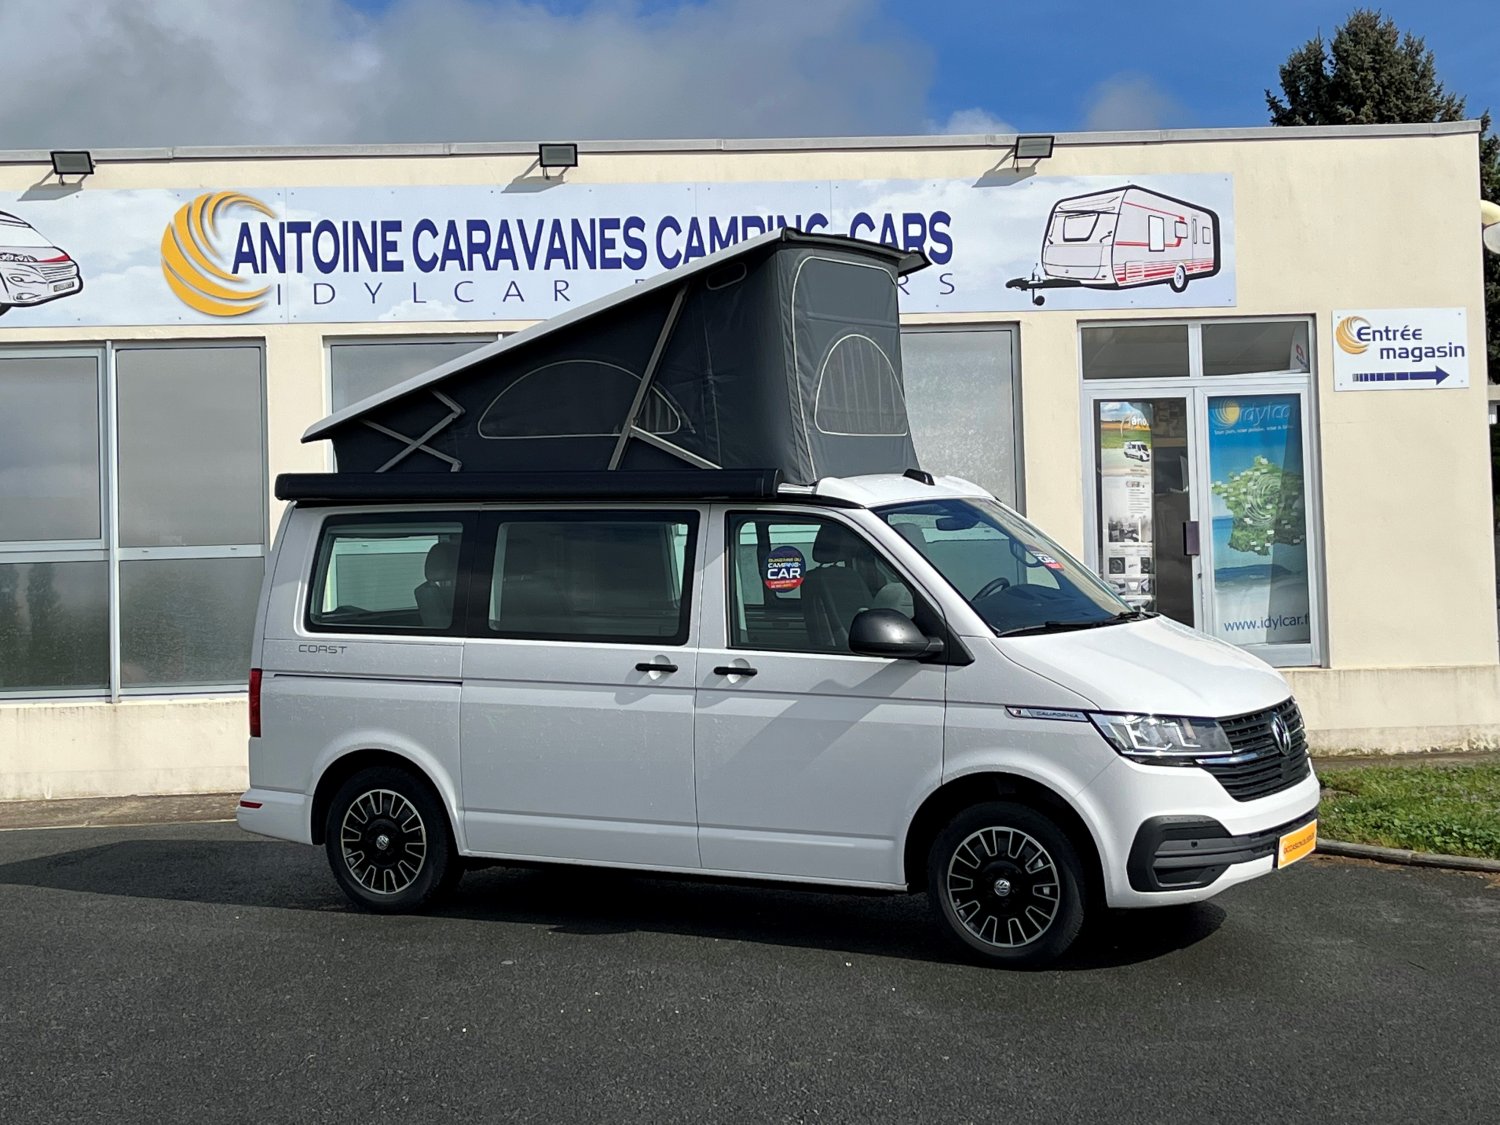 Antoine Caravanes et Camping Car - Volkswagen CALIFORNIA COAST 6.1 à 79 900 €